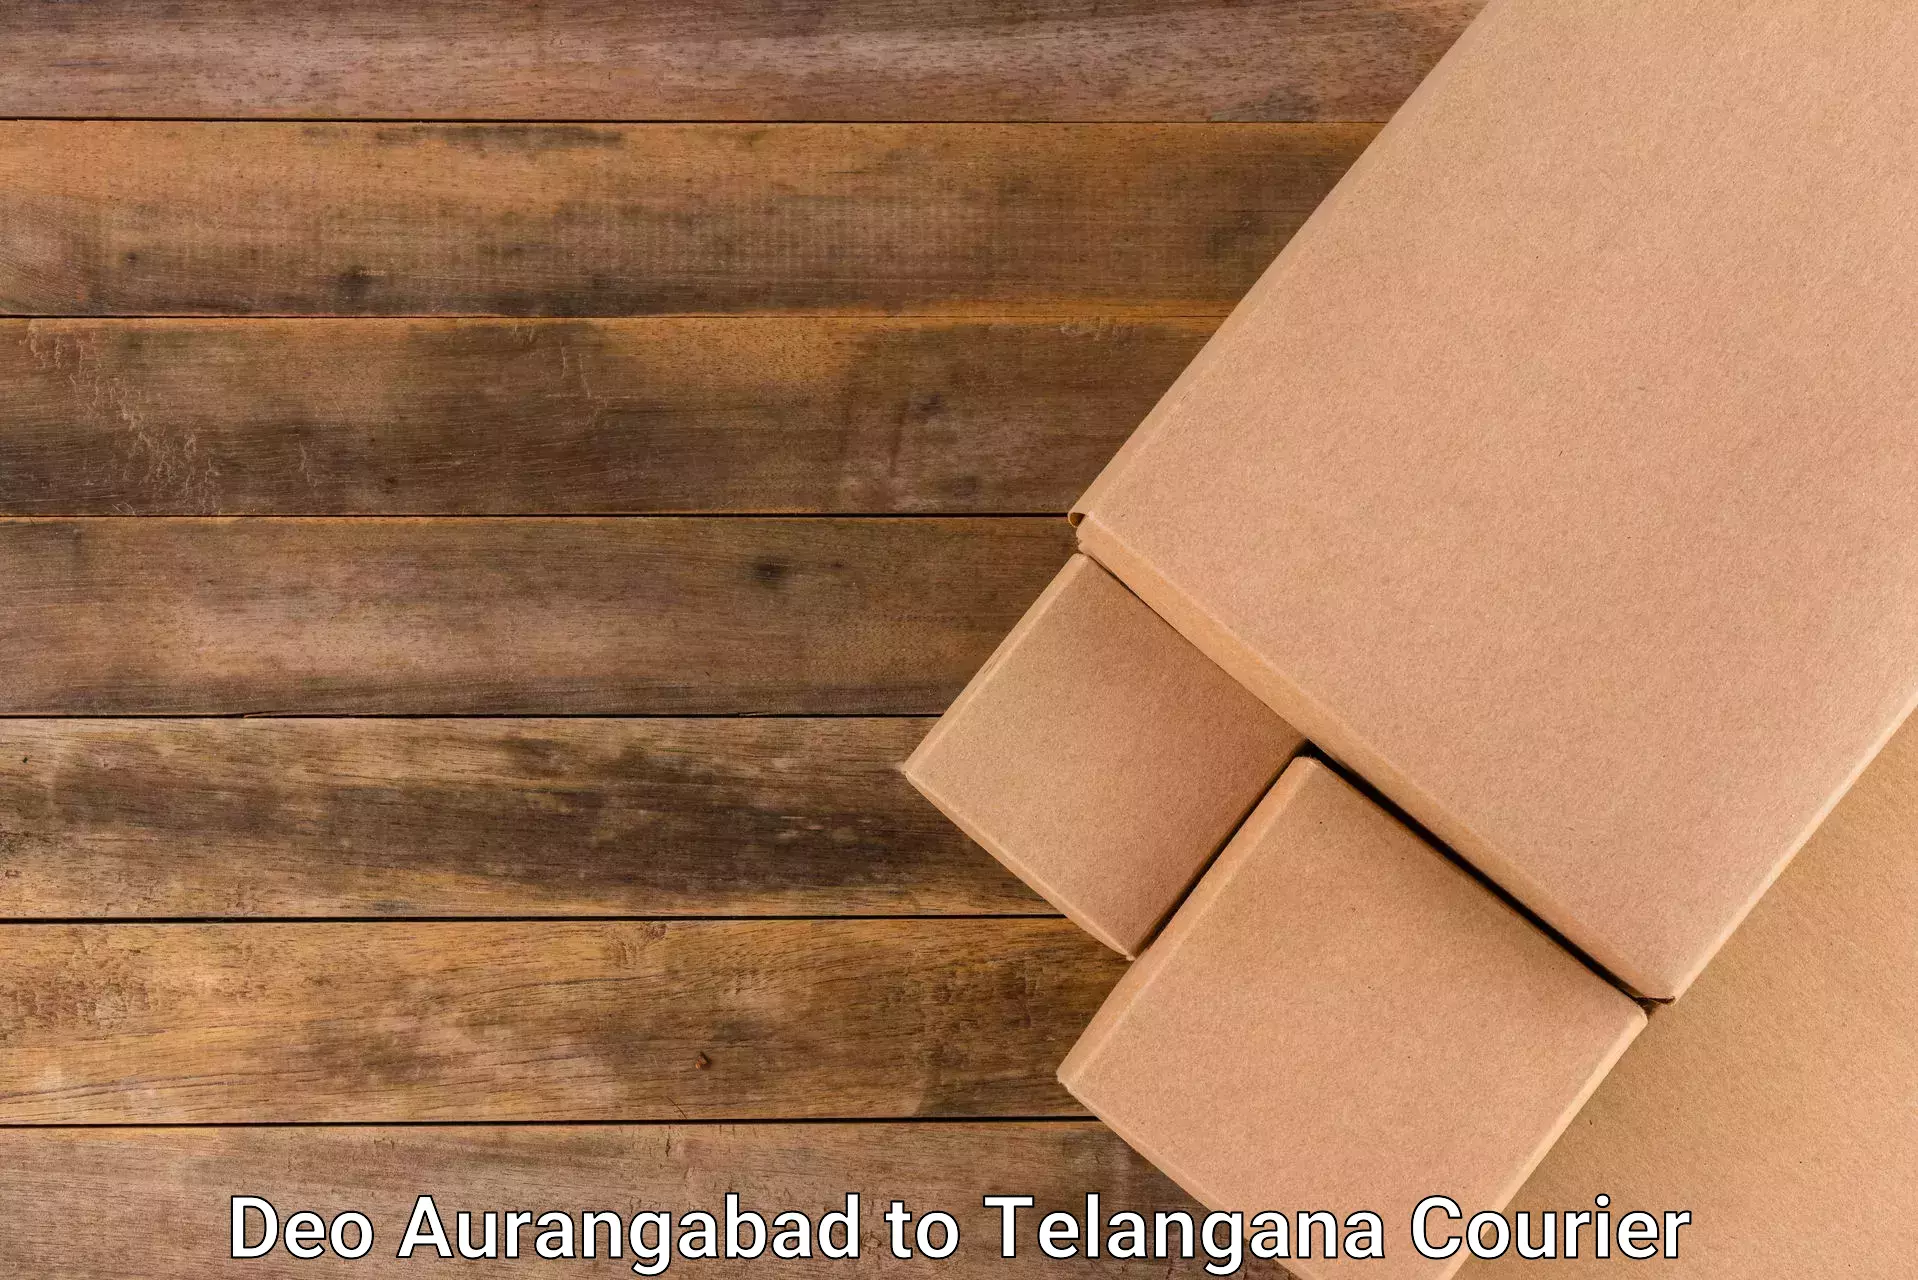 Next day courier Deo Aurangabad to Bellal Tarafa Bodhan